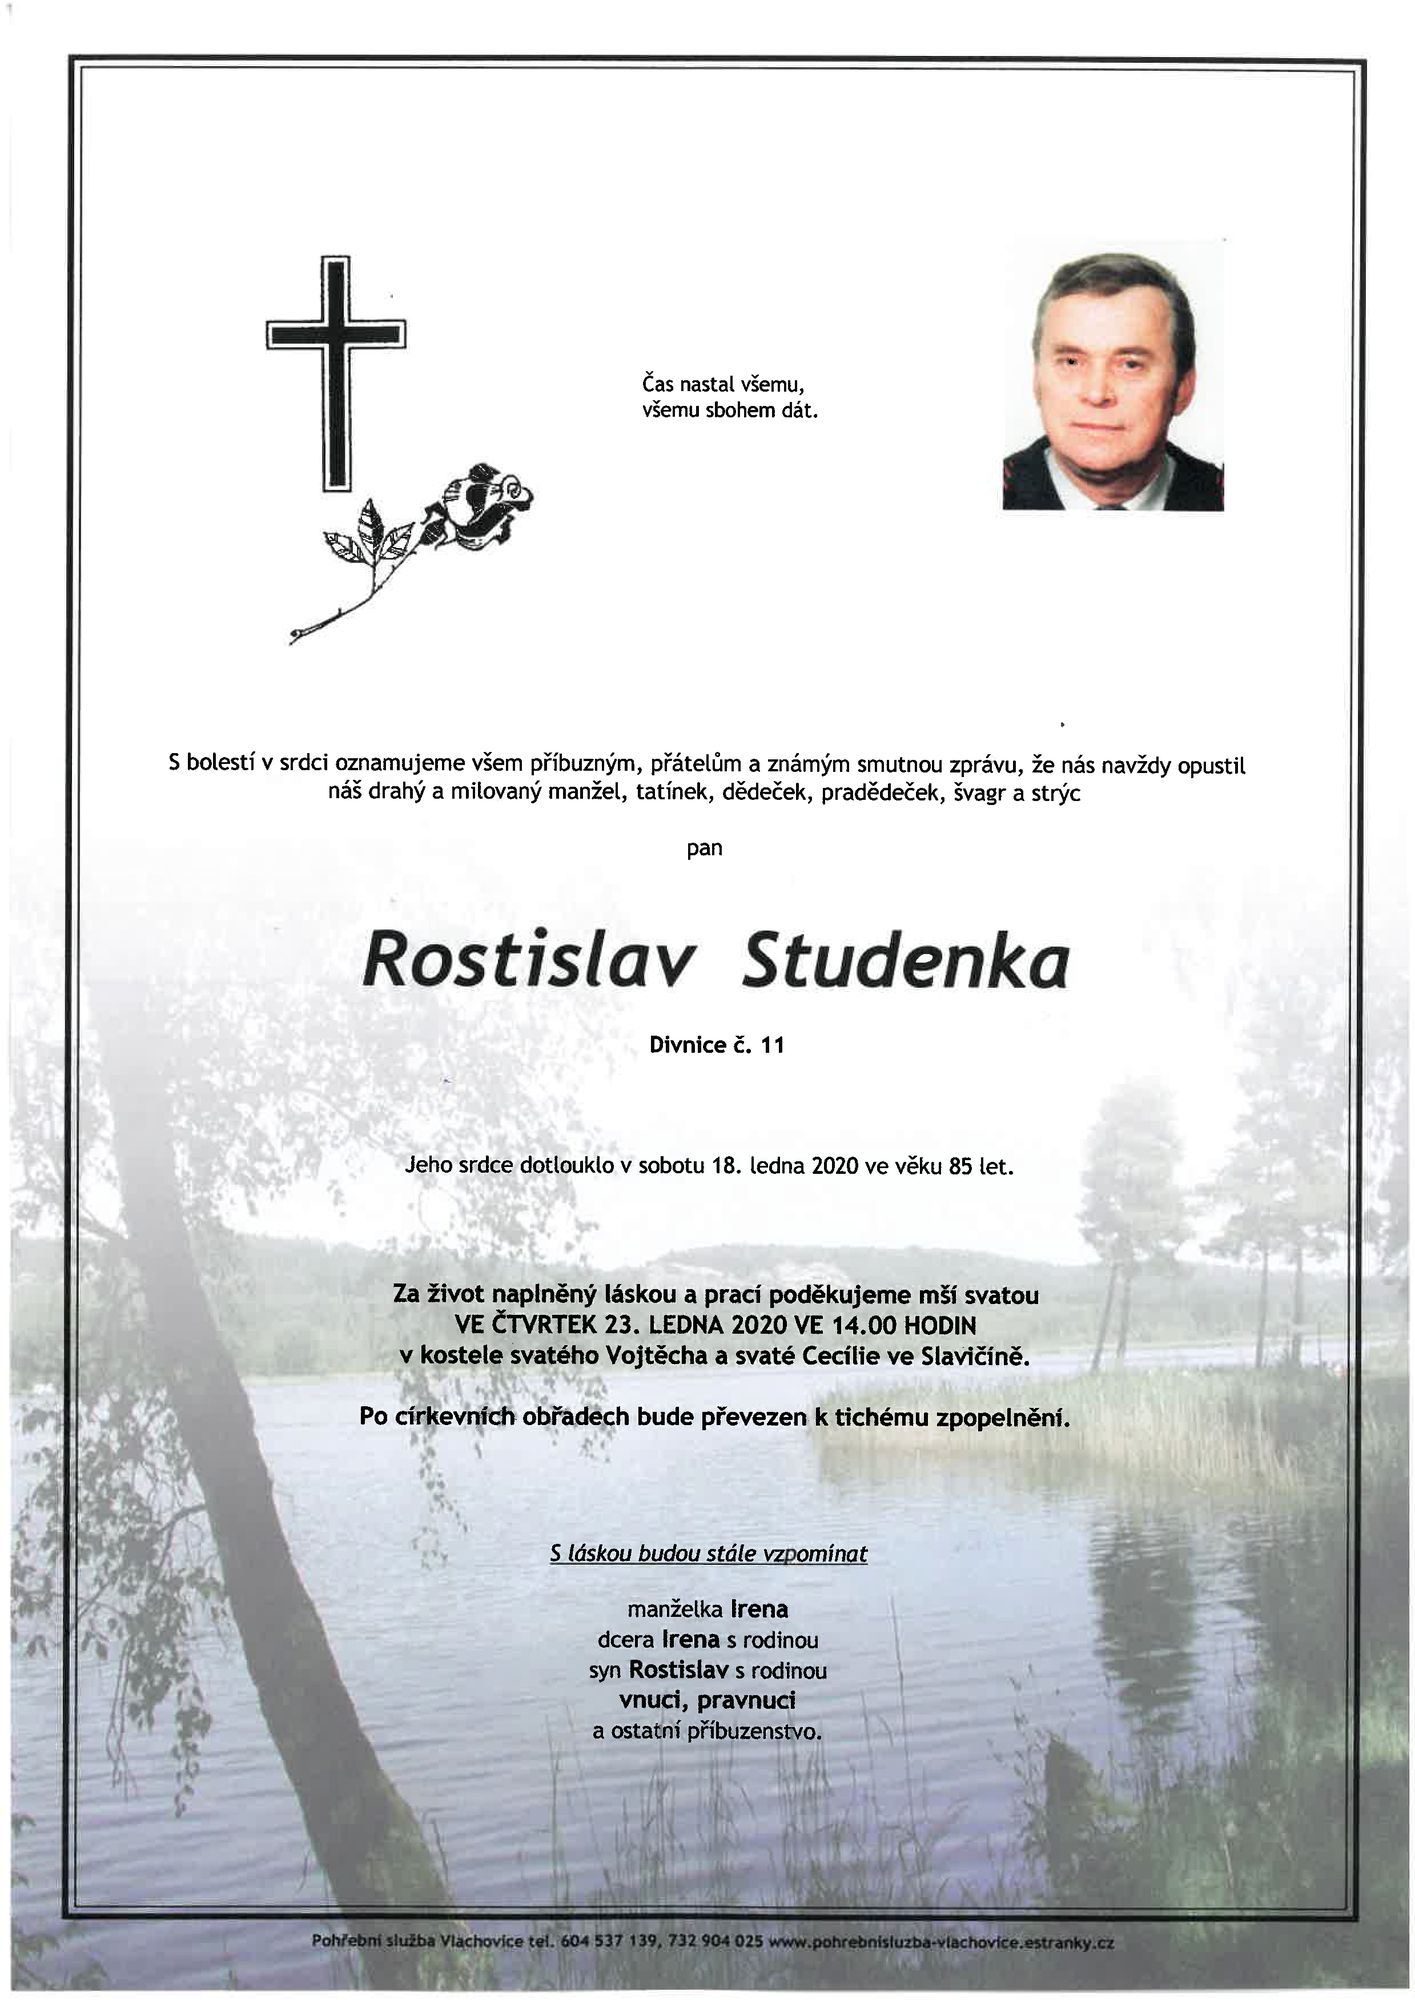 Rostislav Studenka